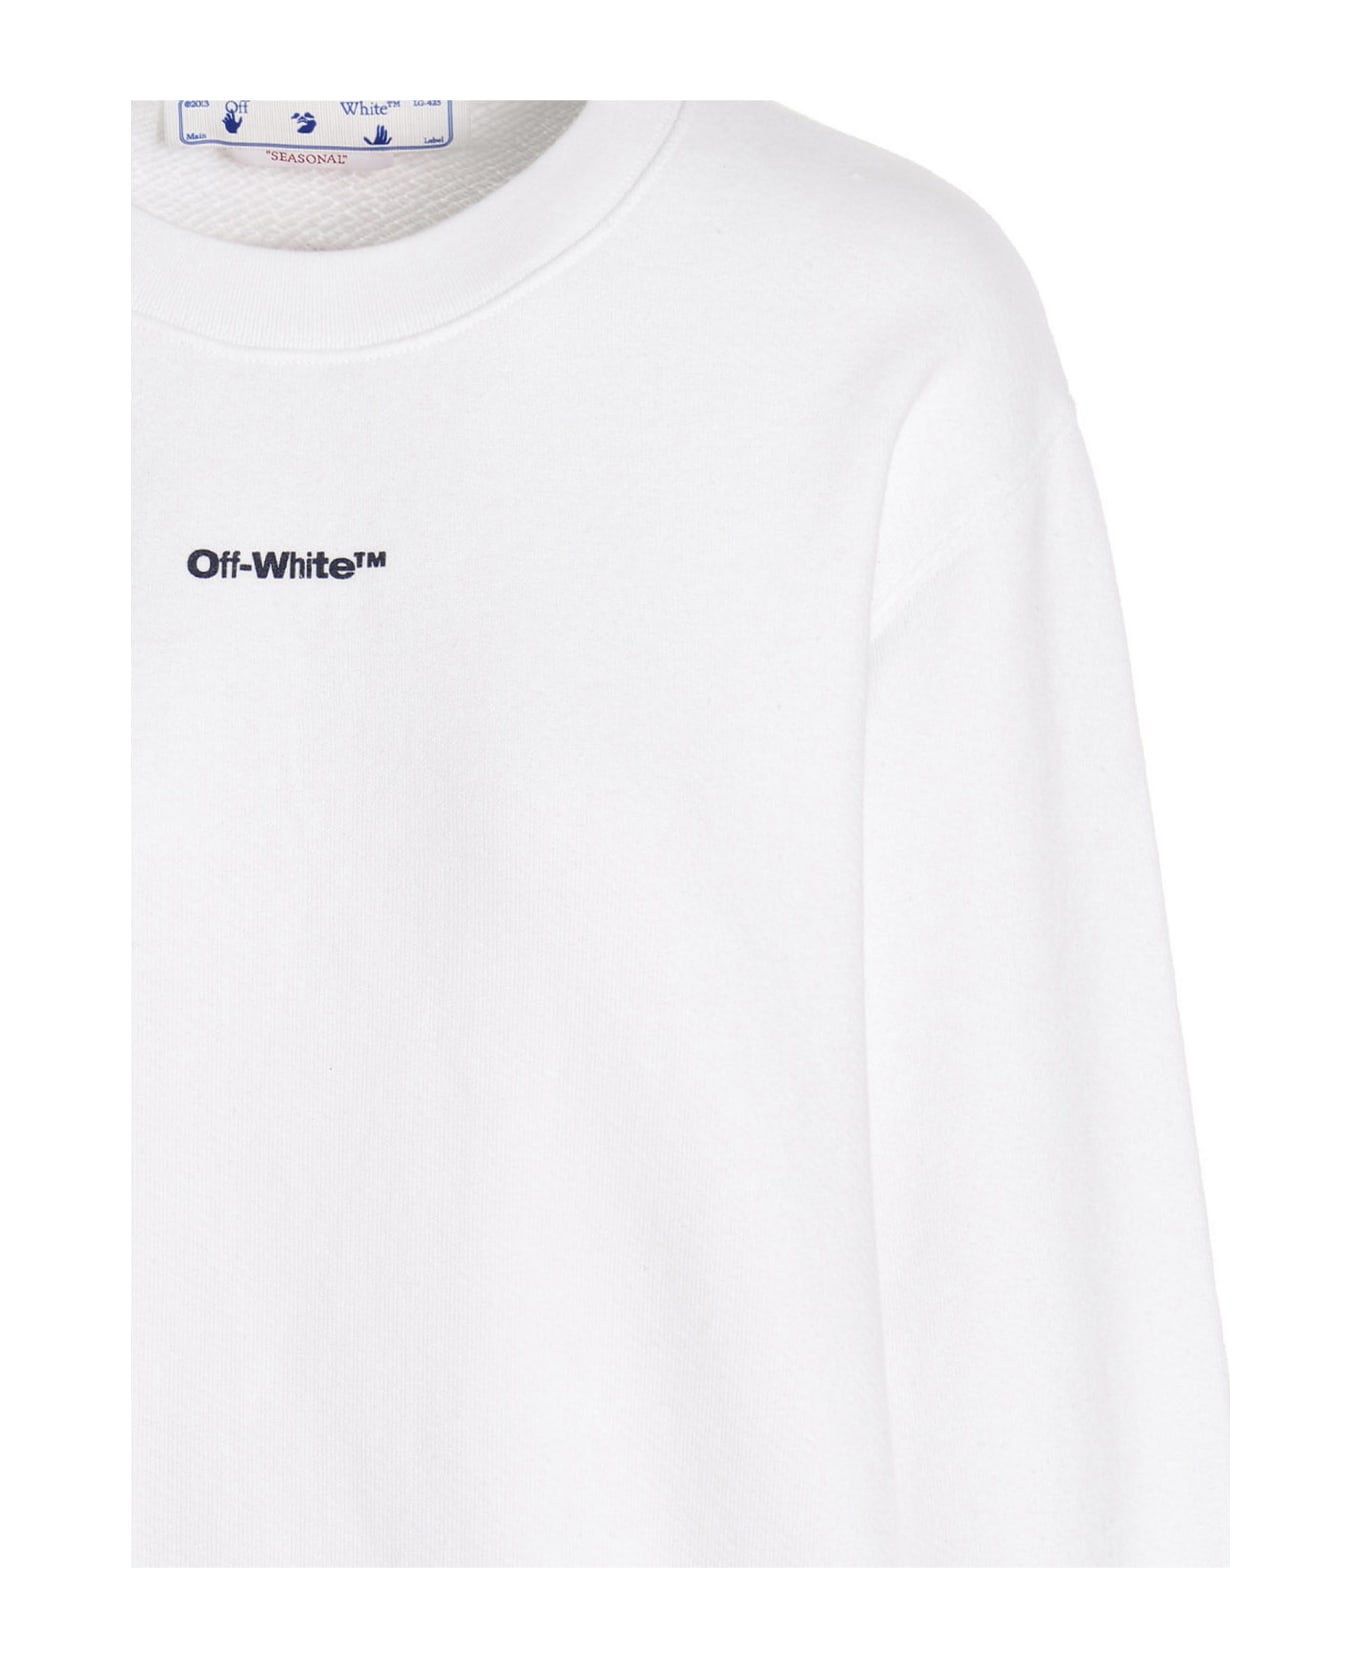 Off-White 'arrow' Sweatshirt - White